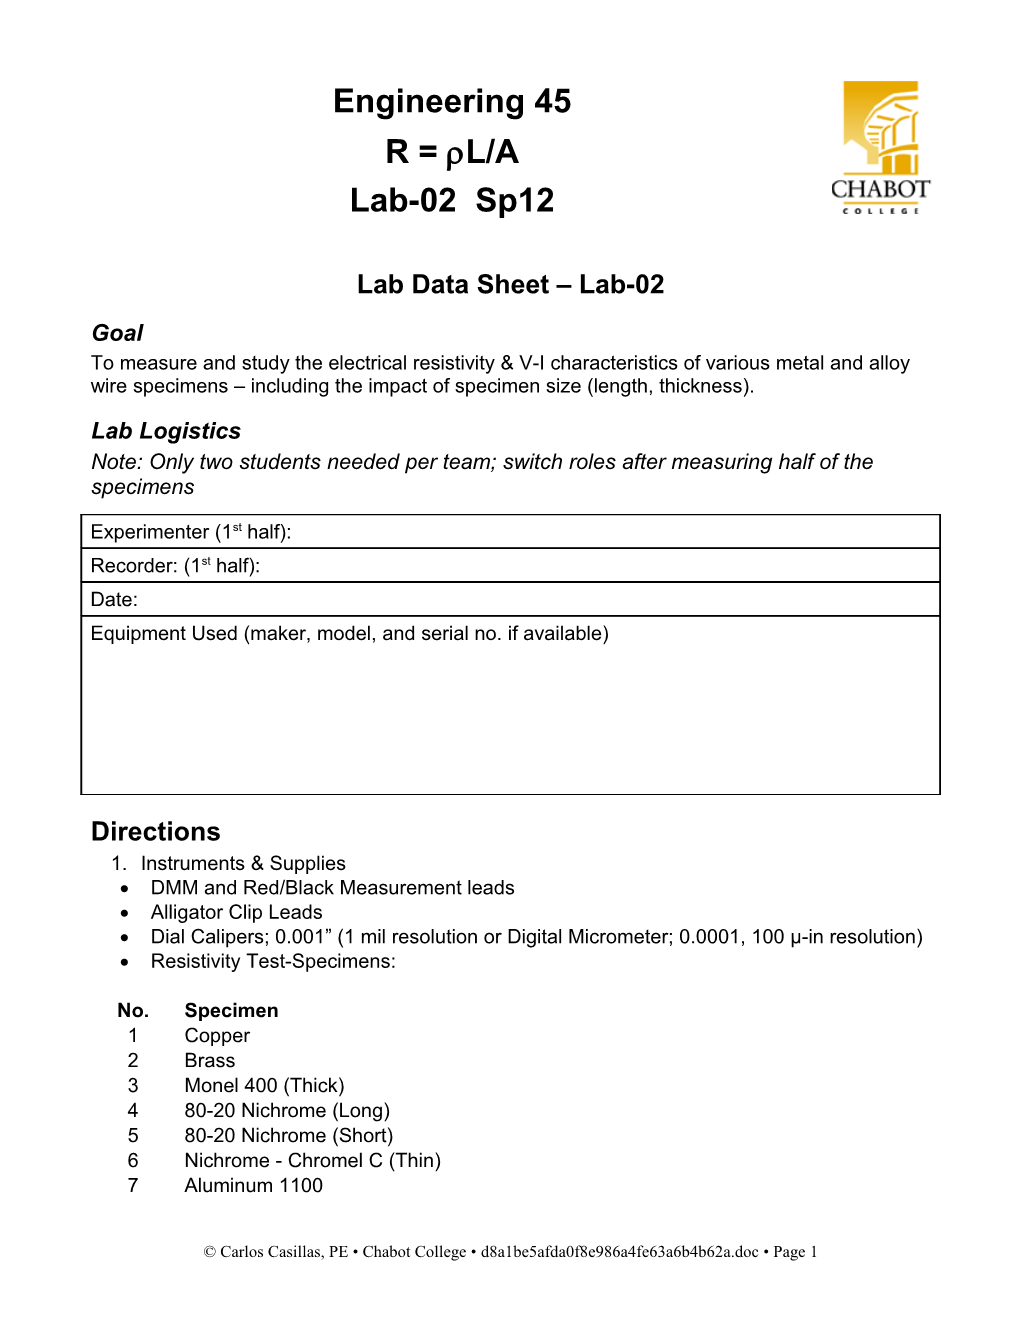 Lab Data Sheet Lab-02